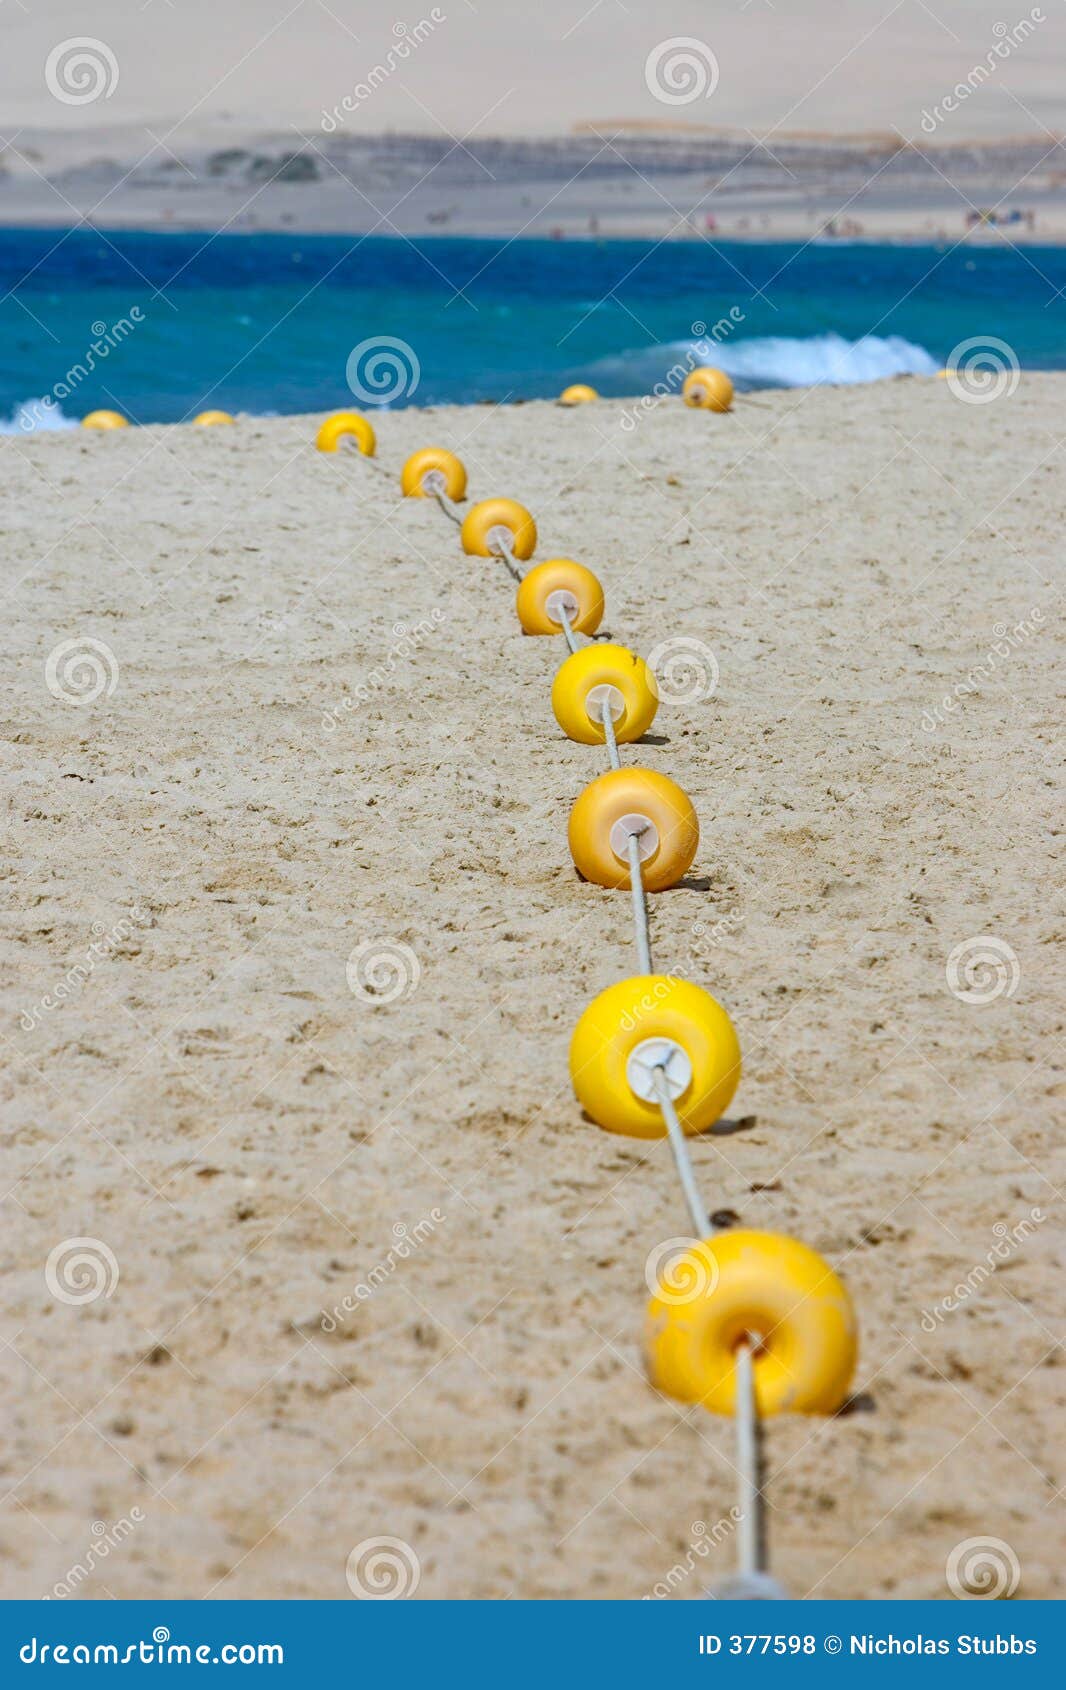 https://thumbs.dreamstime.com/z/string-yellow-marker-buoys-sandy-beach-377598.jpg